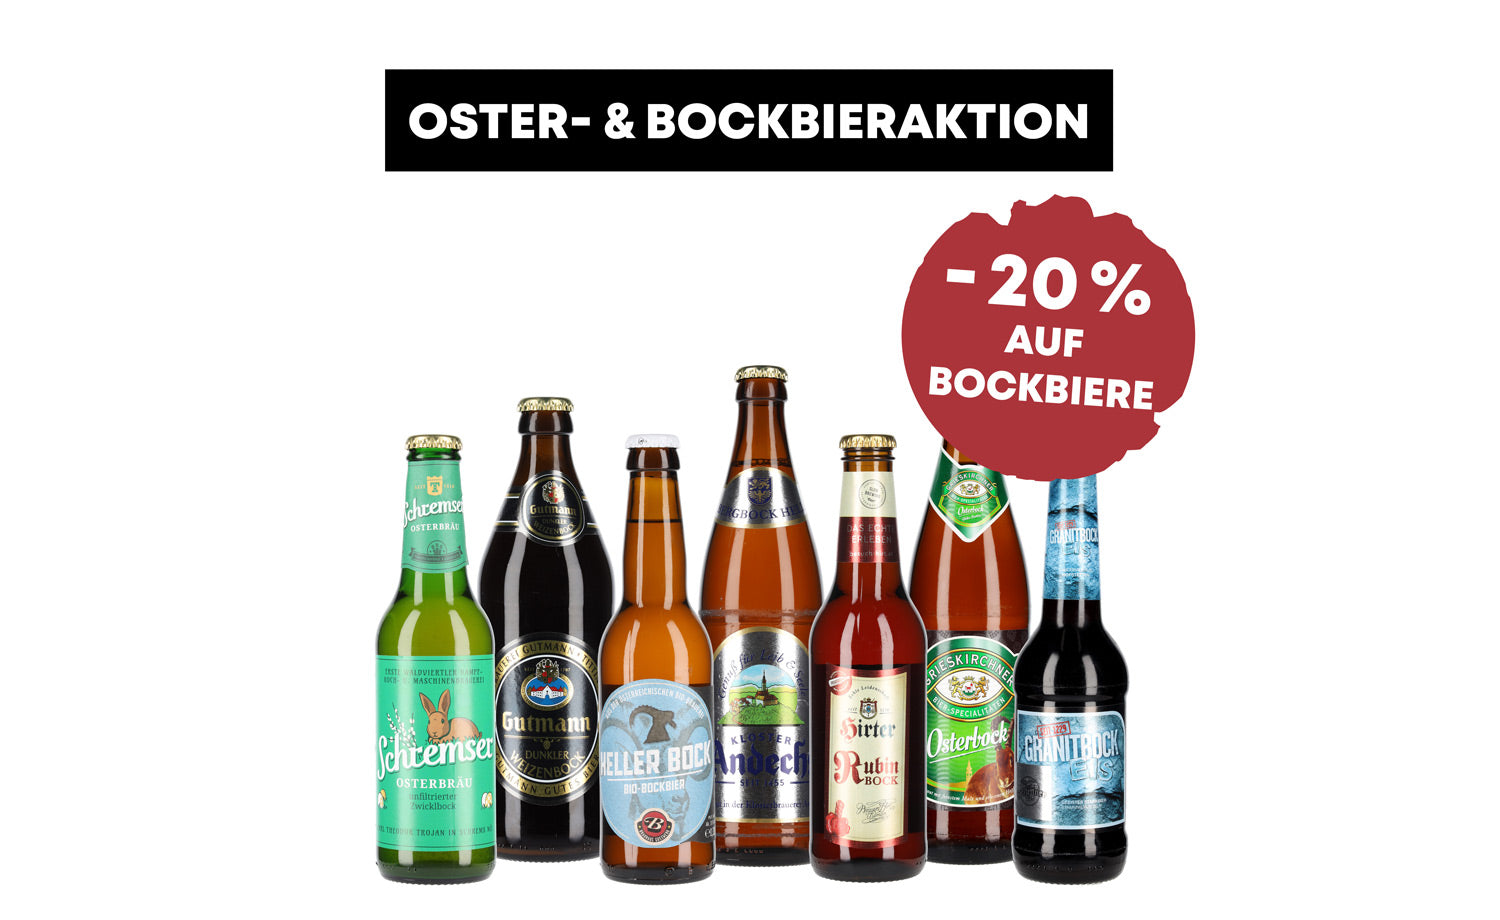 Oster- & Bockbieraktion